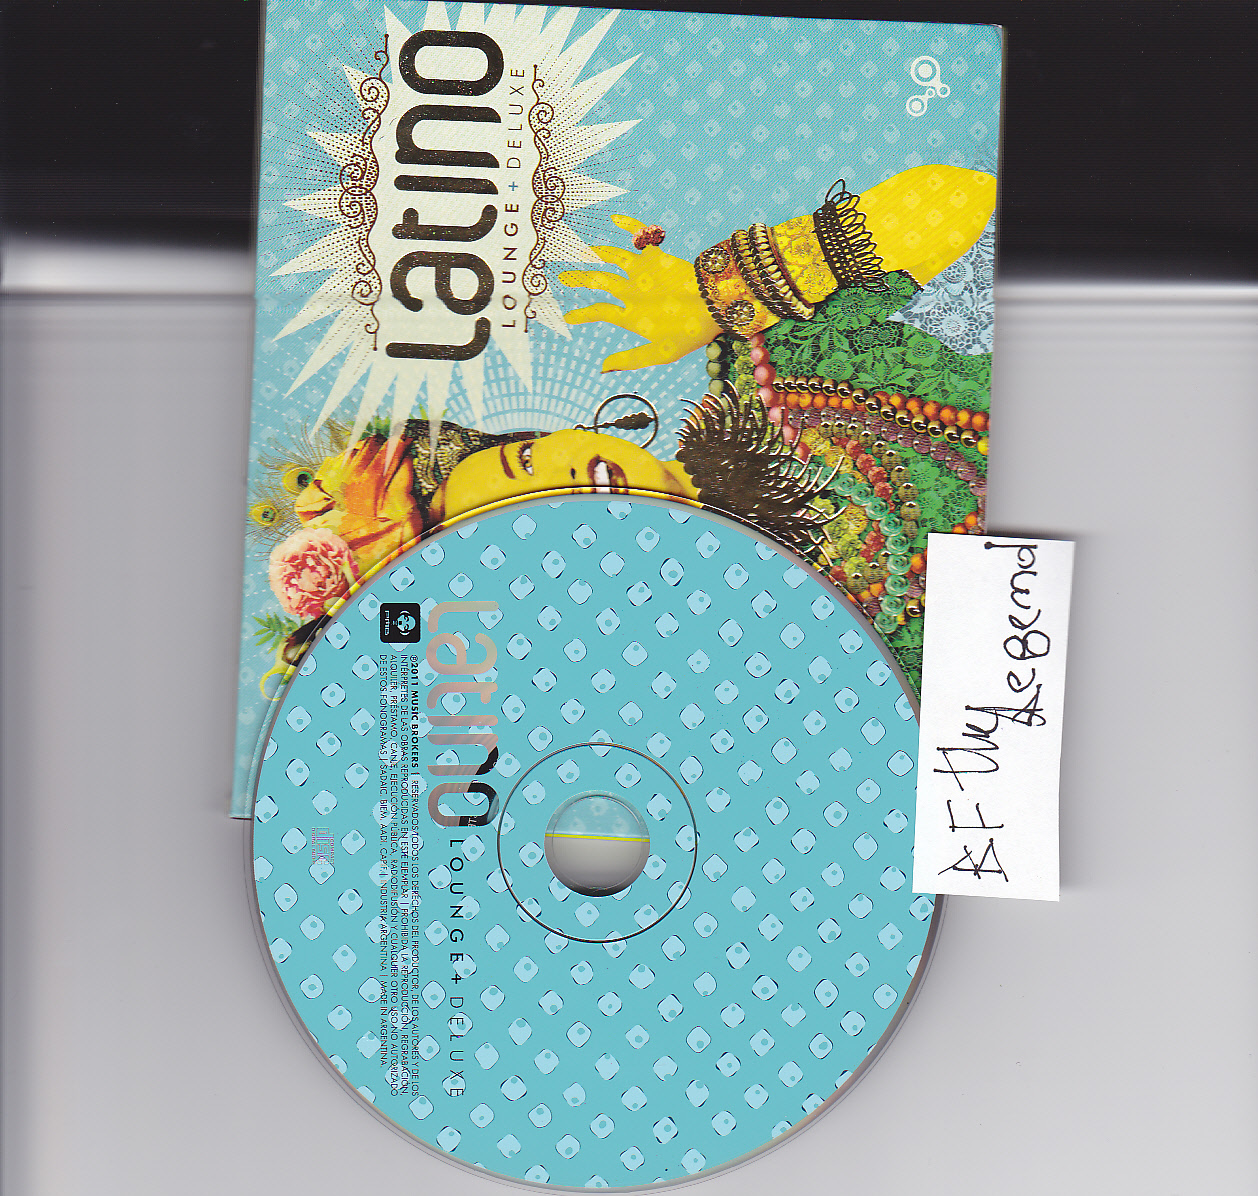 VA - Latino Lounge Deluxe CD 2011